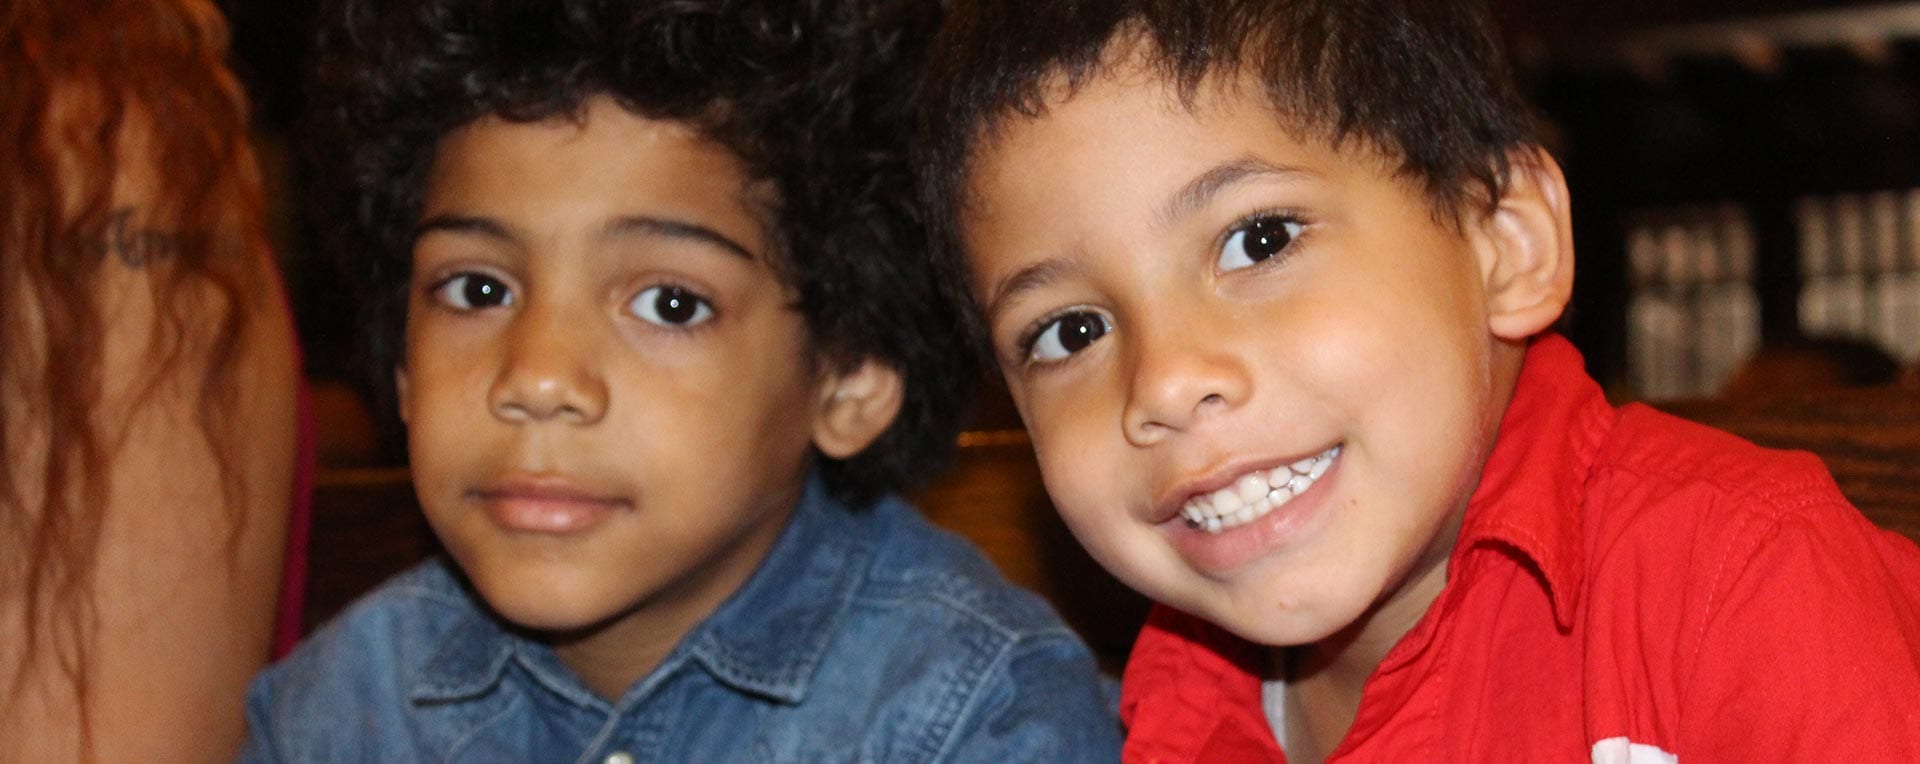 headshot of two boys smiling